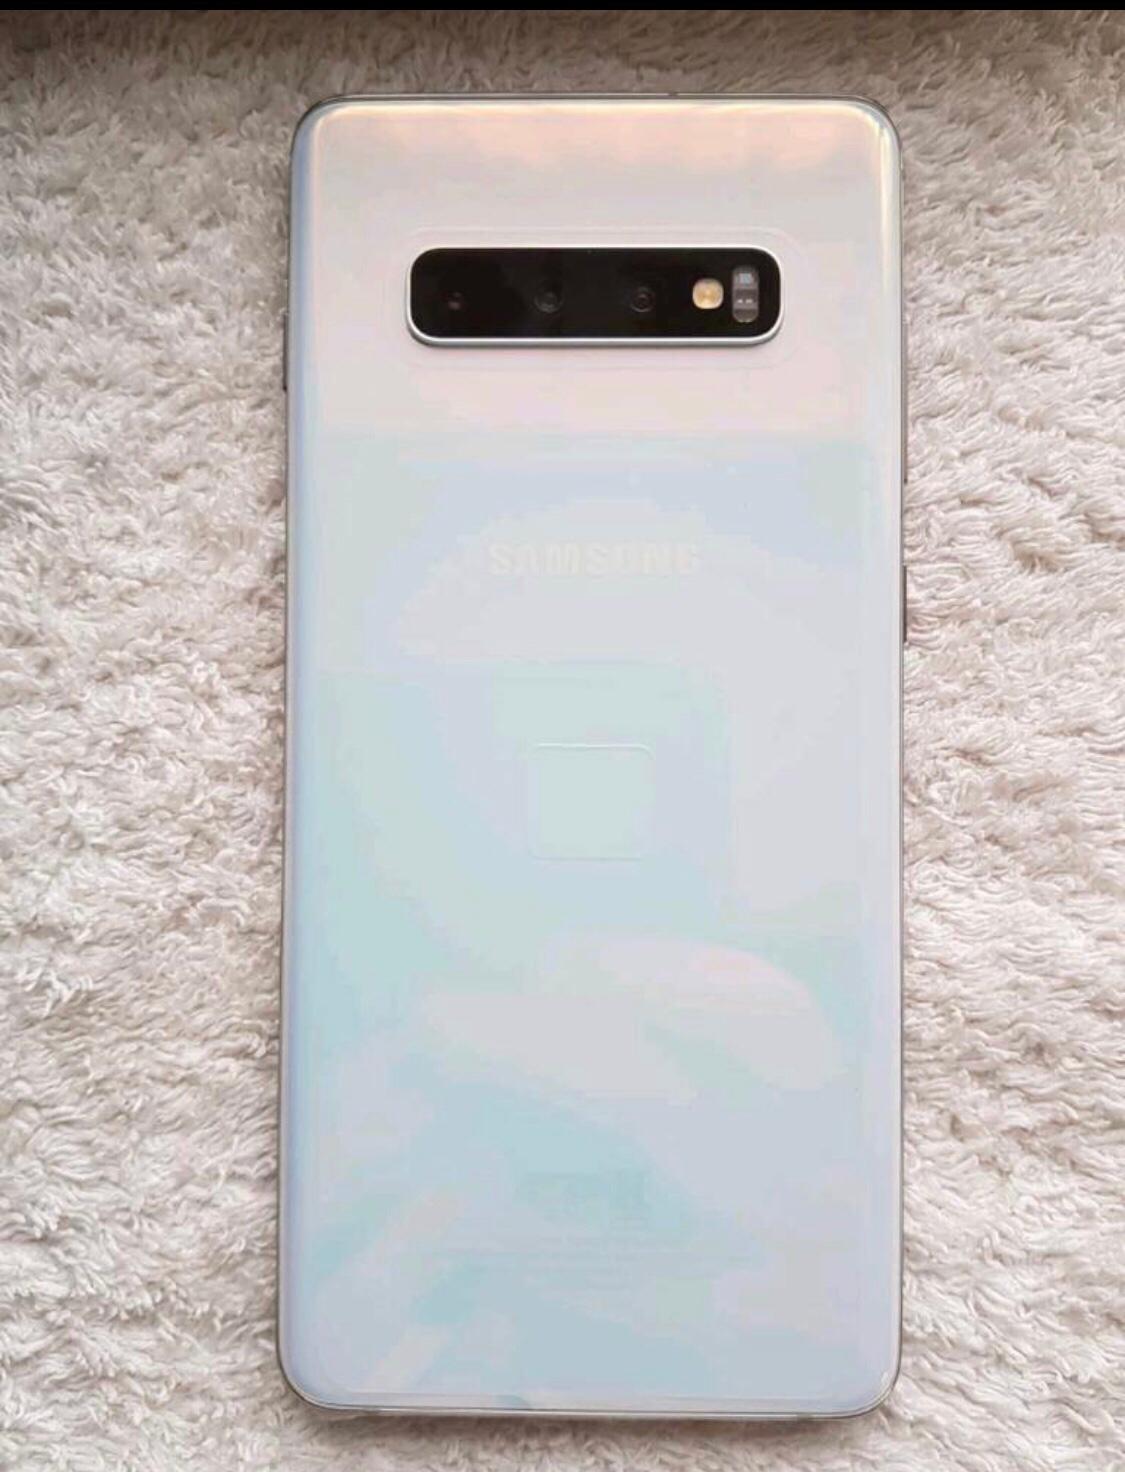 Galaxy S10 Prism White 128 GB docomo